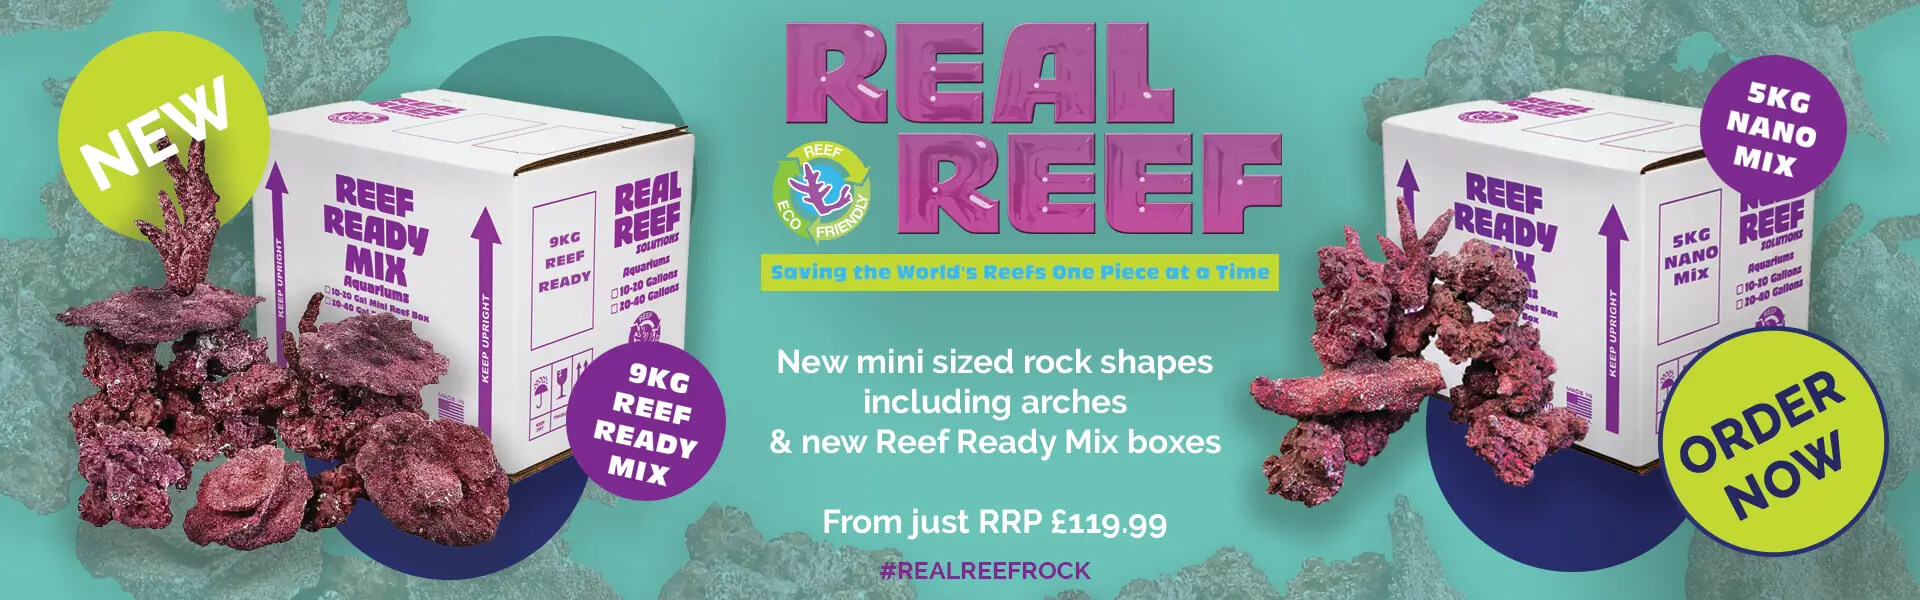 real reef - new nano series